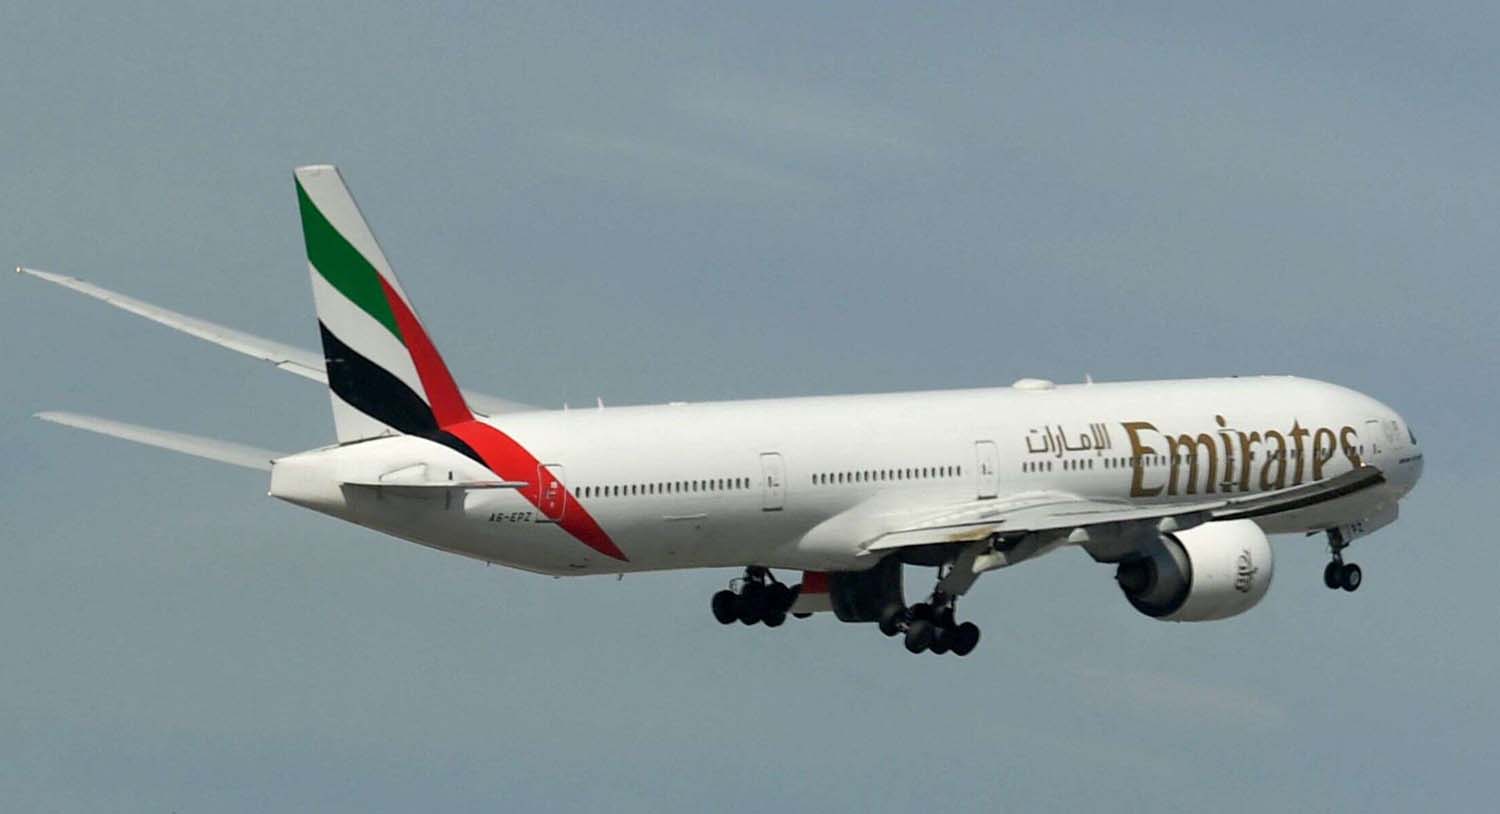 Flight No. EK2646 flew for just under an hour over the UAE coastline